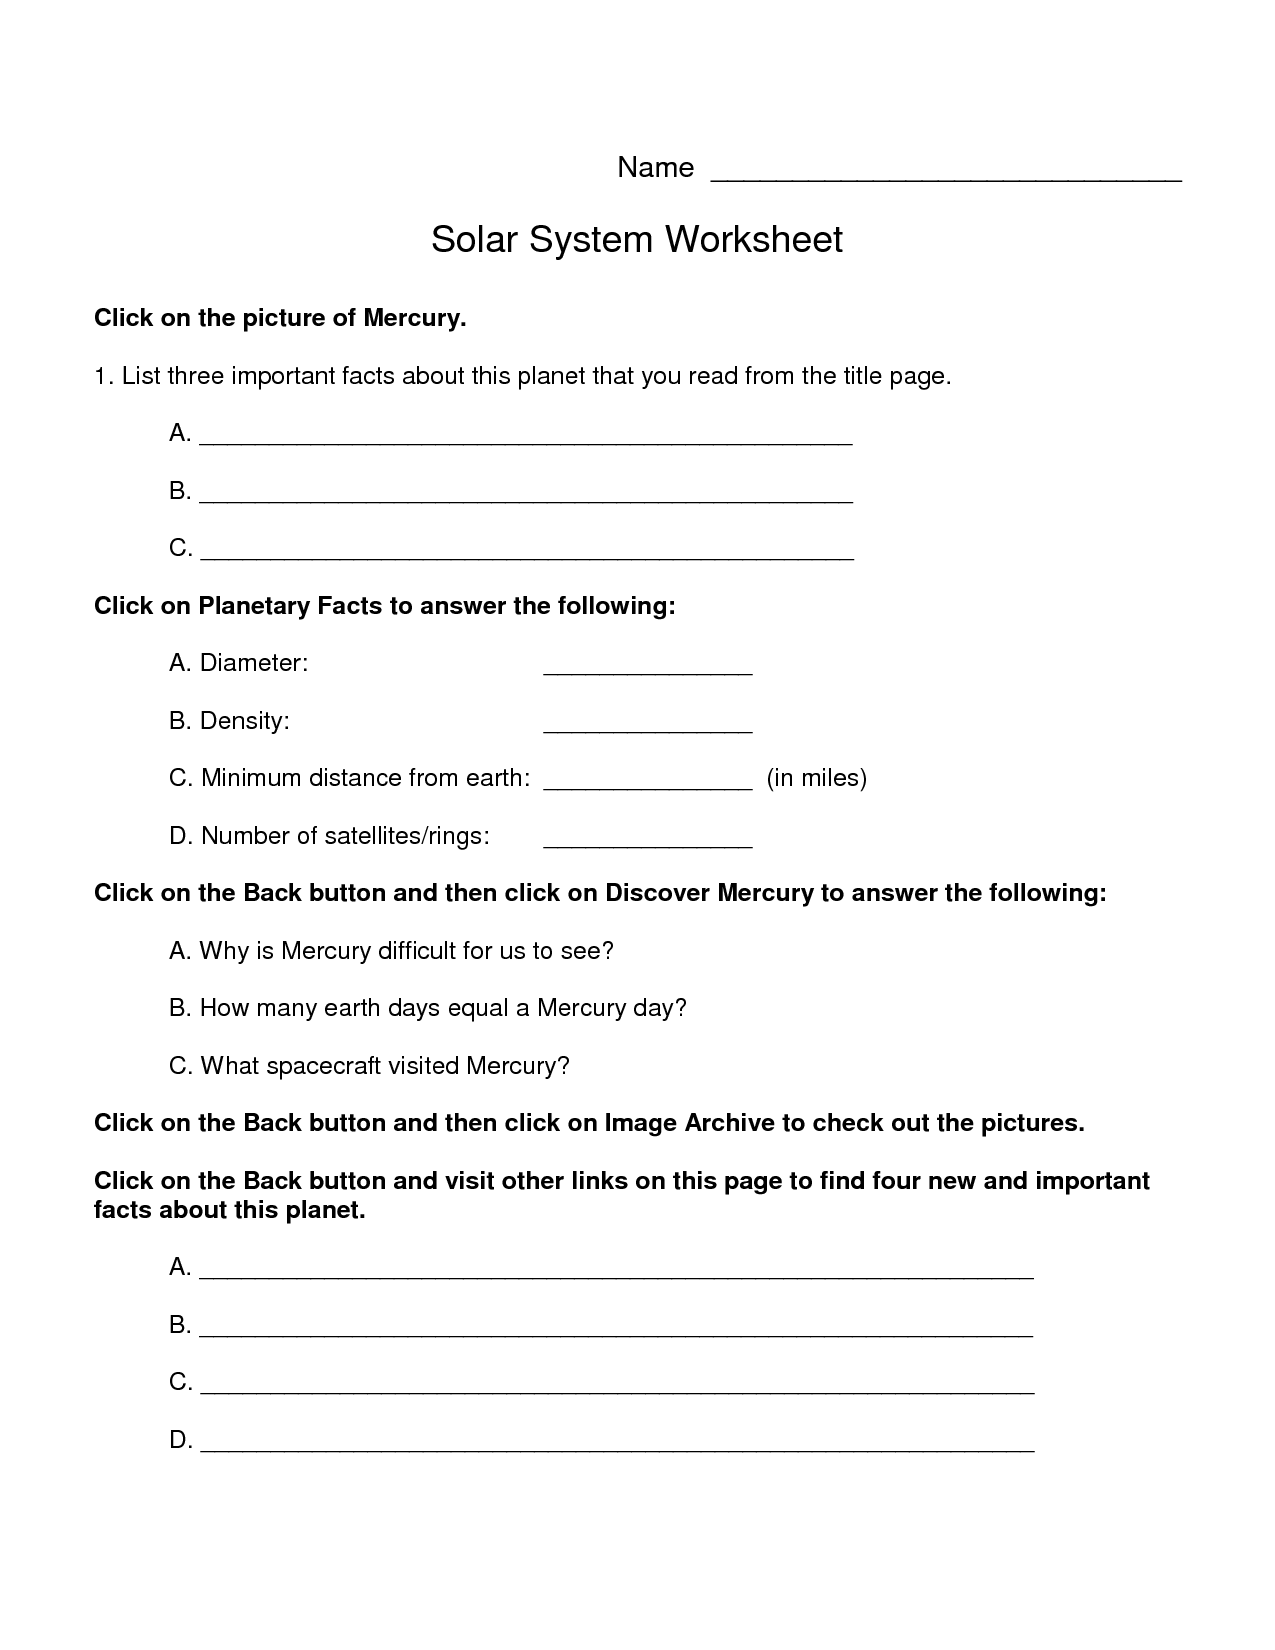 Solar System Worksheet